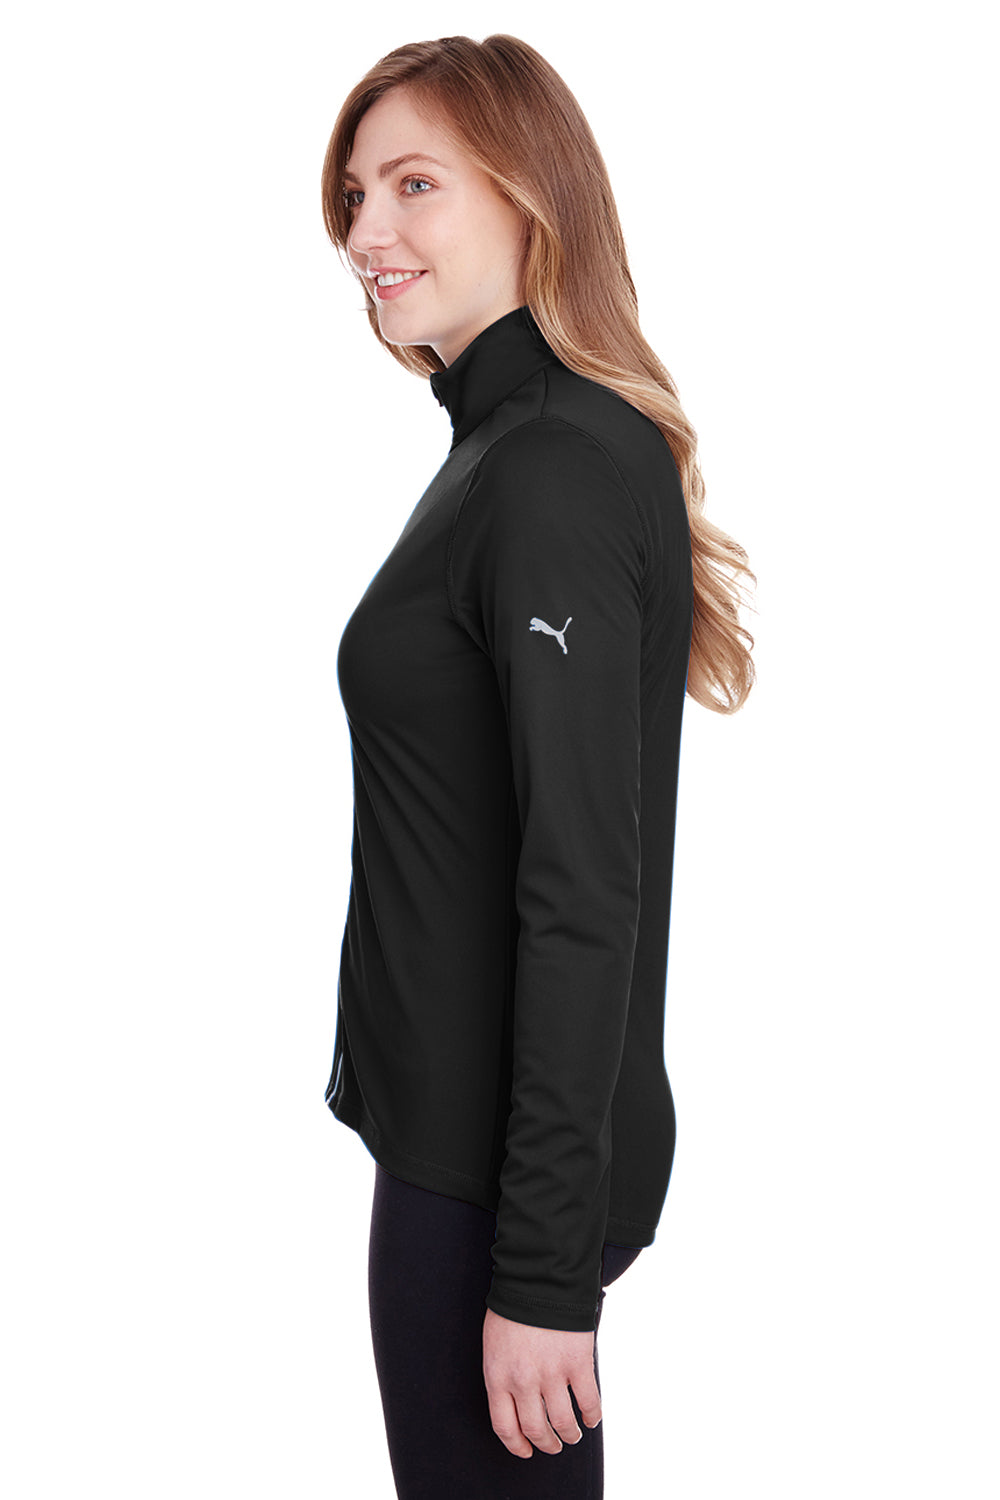 Puma 596803 Womens Icon Performance Moisture Wicking Full Zip Sweatshirt Black Side